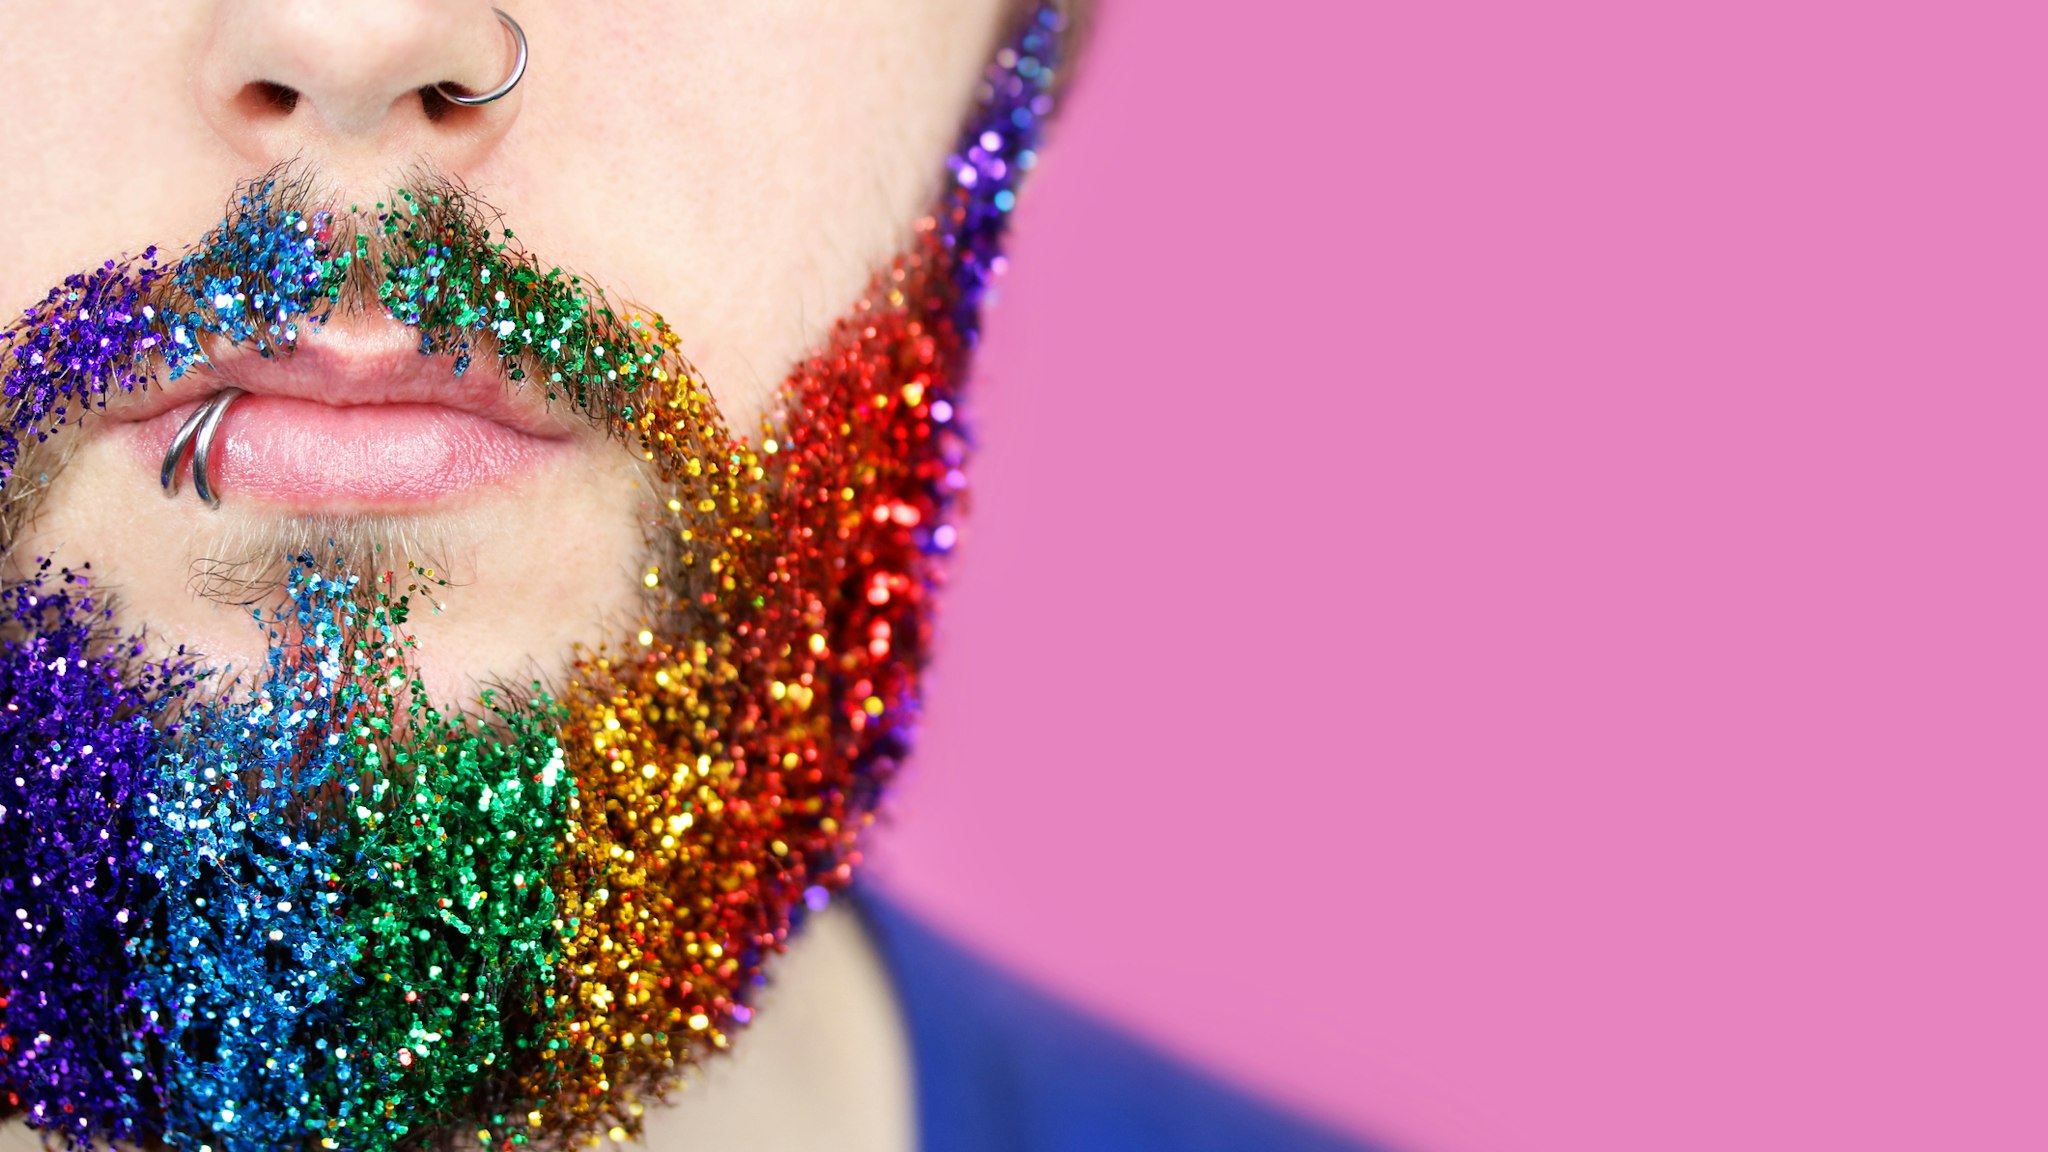 gay pride man with rainbow glitter beard - stock photo